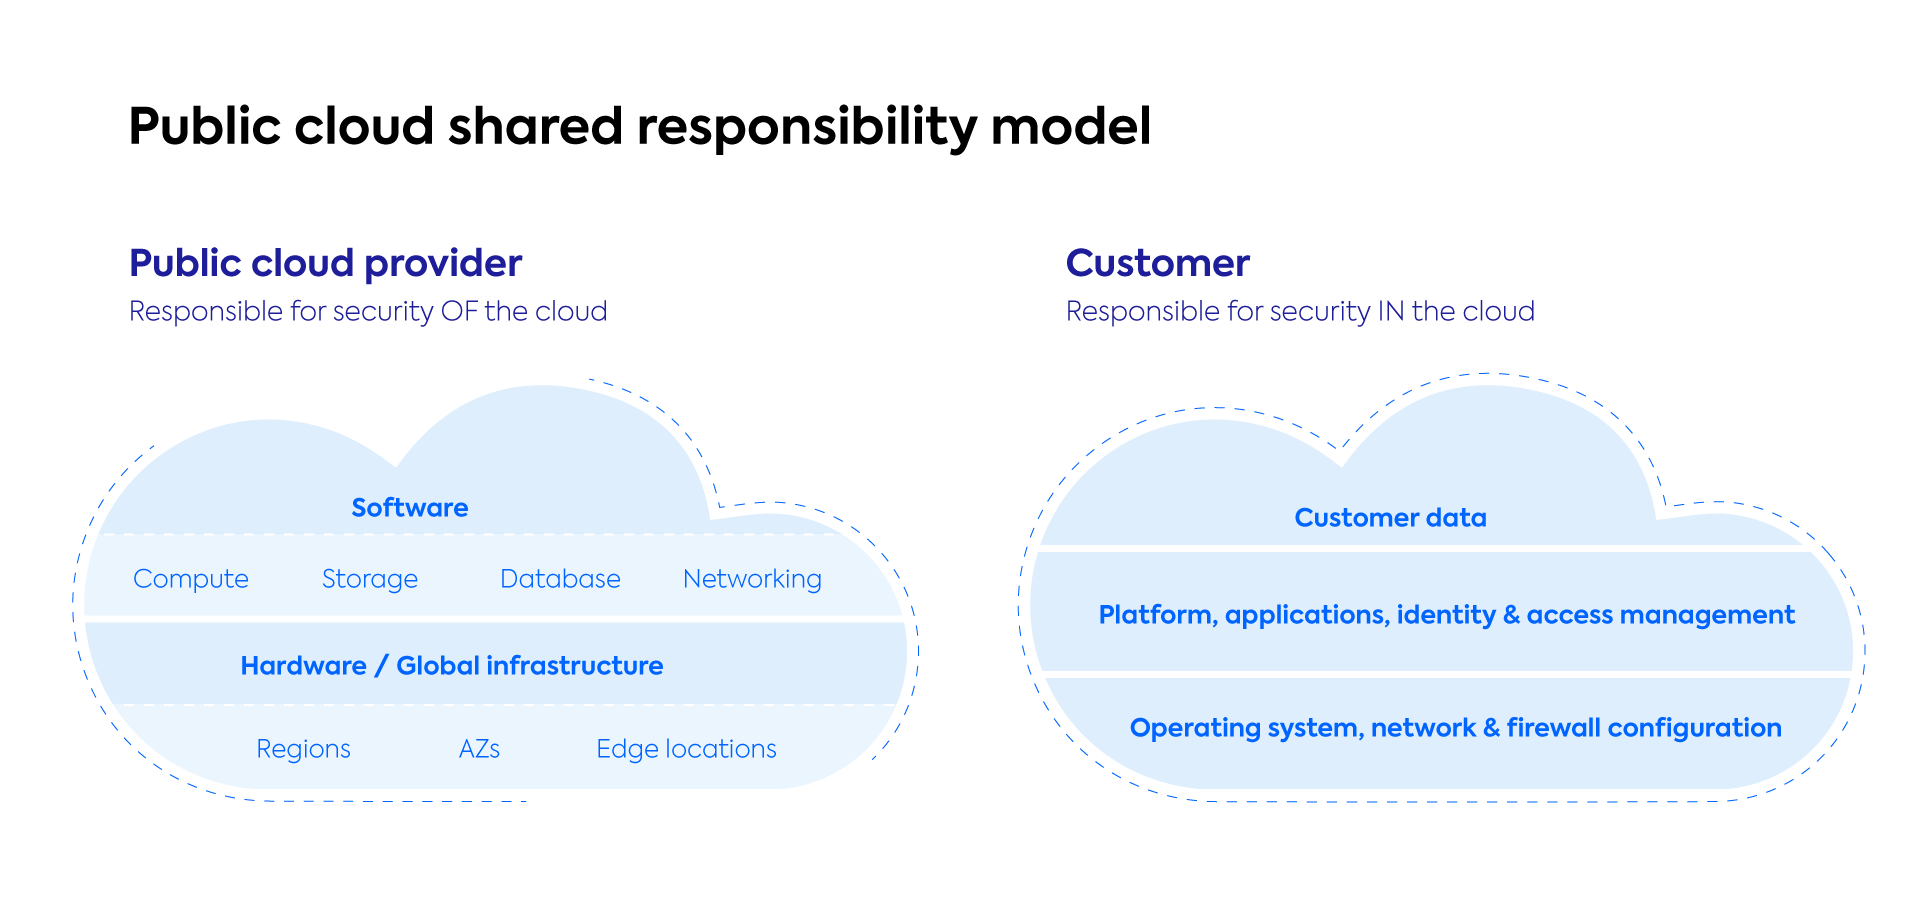 AWS Shared Responsibility Model